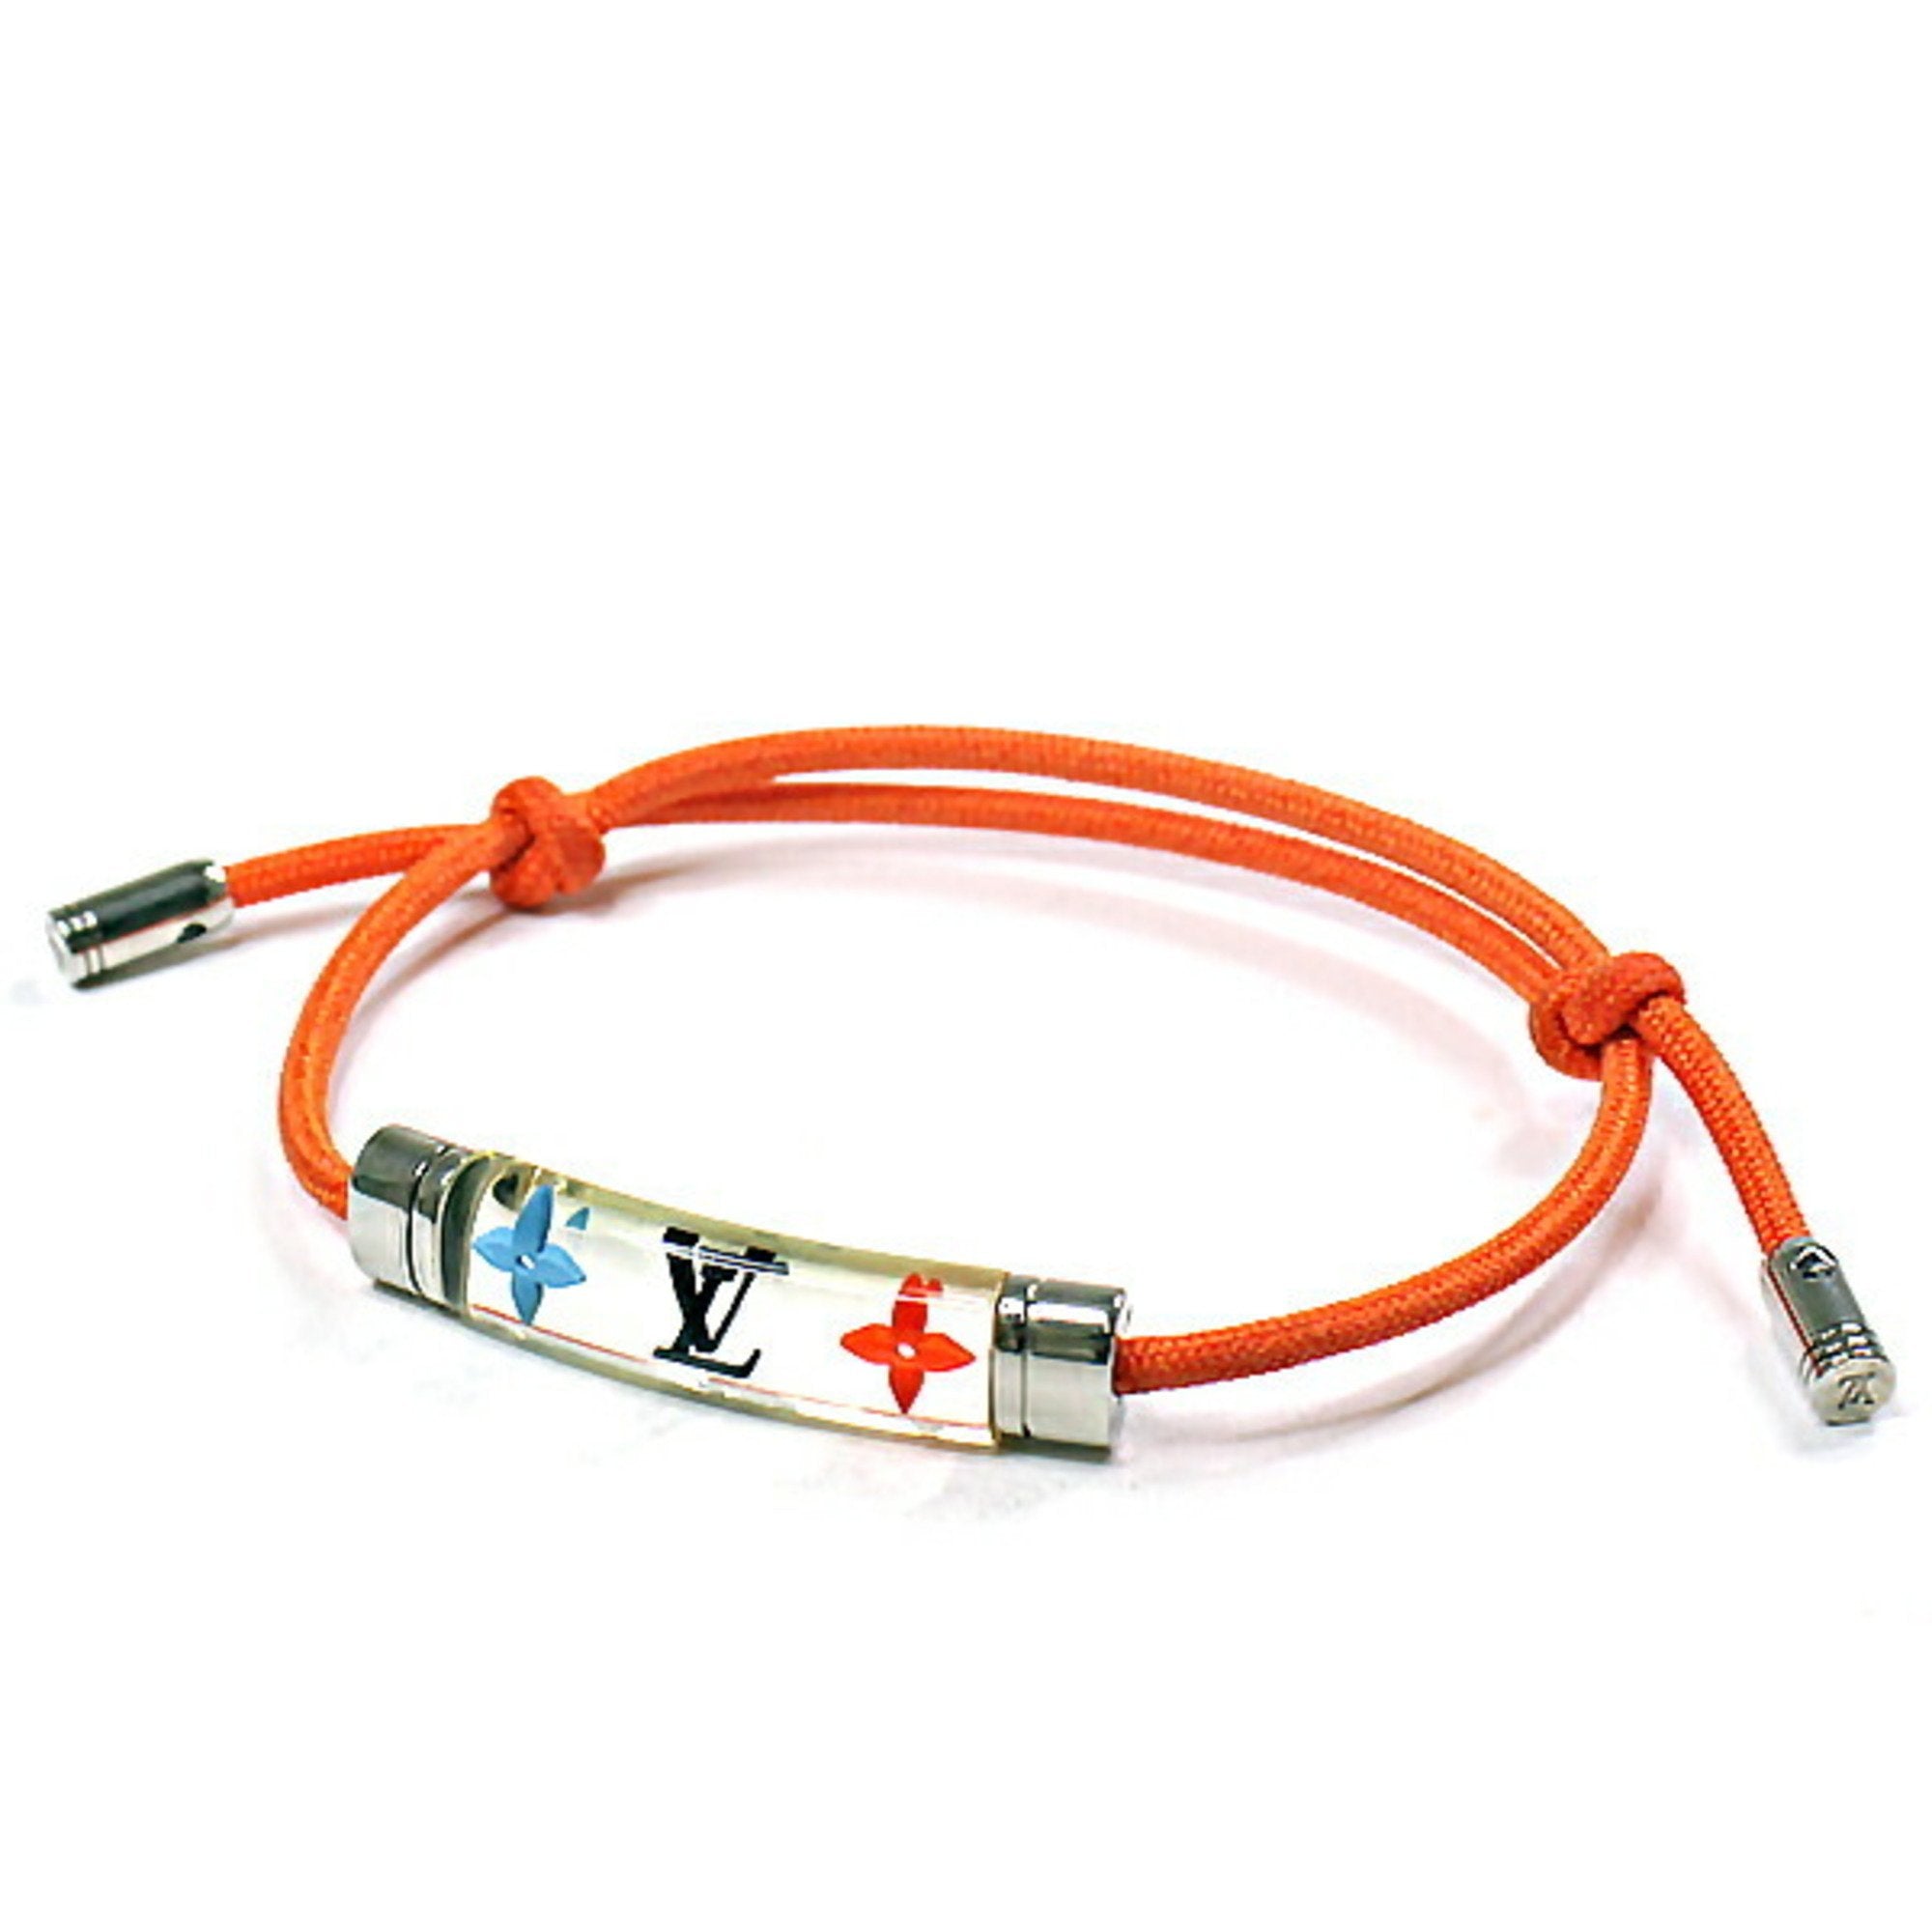 LV Loop Bag & Bracelet Review. I'm in love! 🤎LINK IN BIO